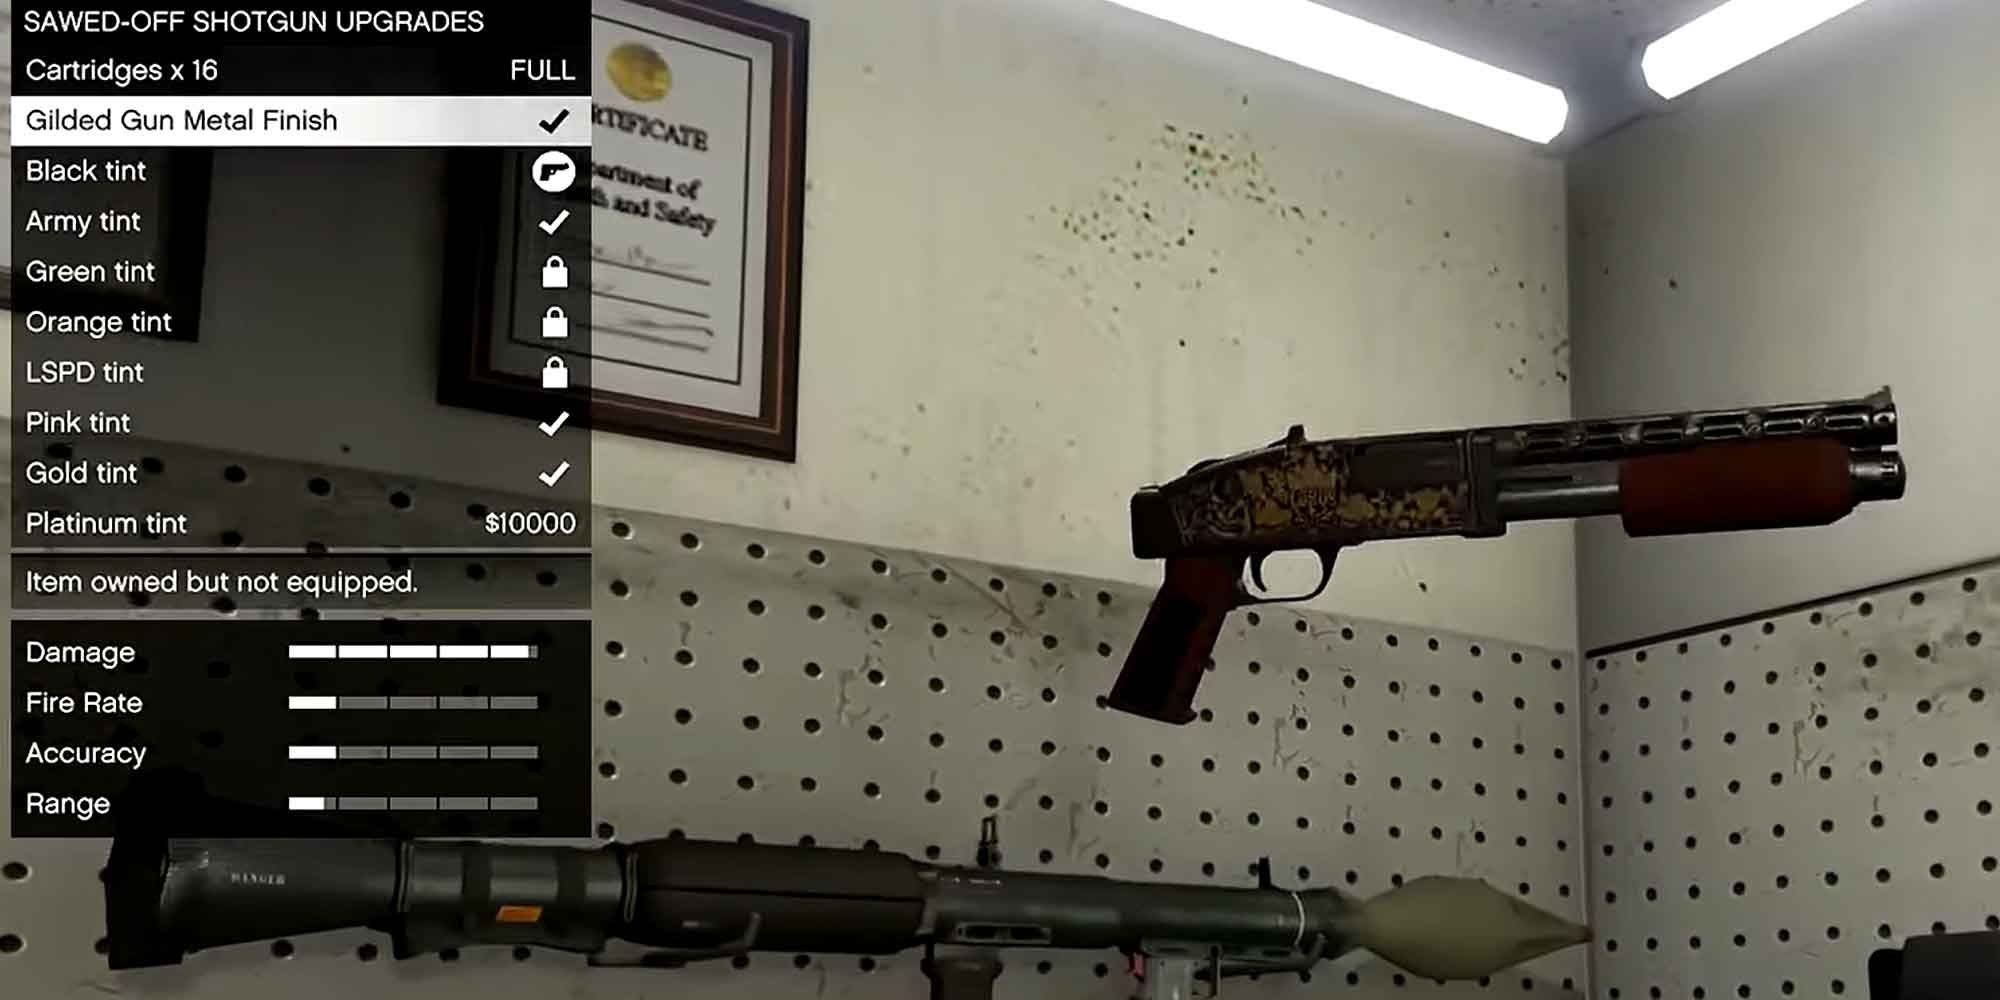 Buying the Sawed-Off Shotgun at Ammu-Nation in GTA 5